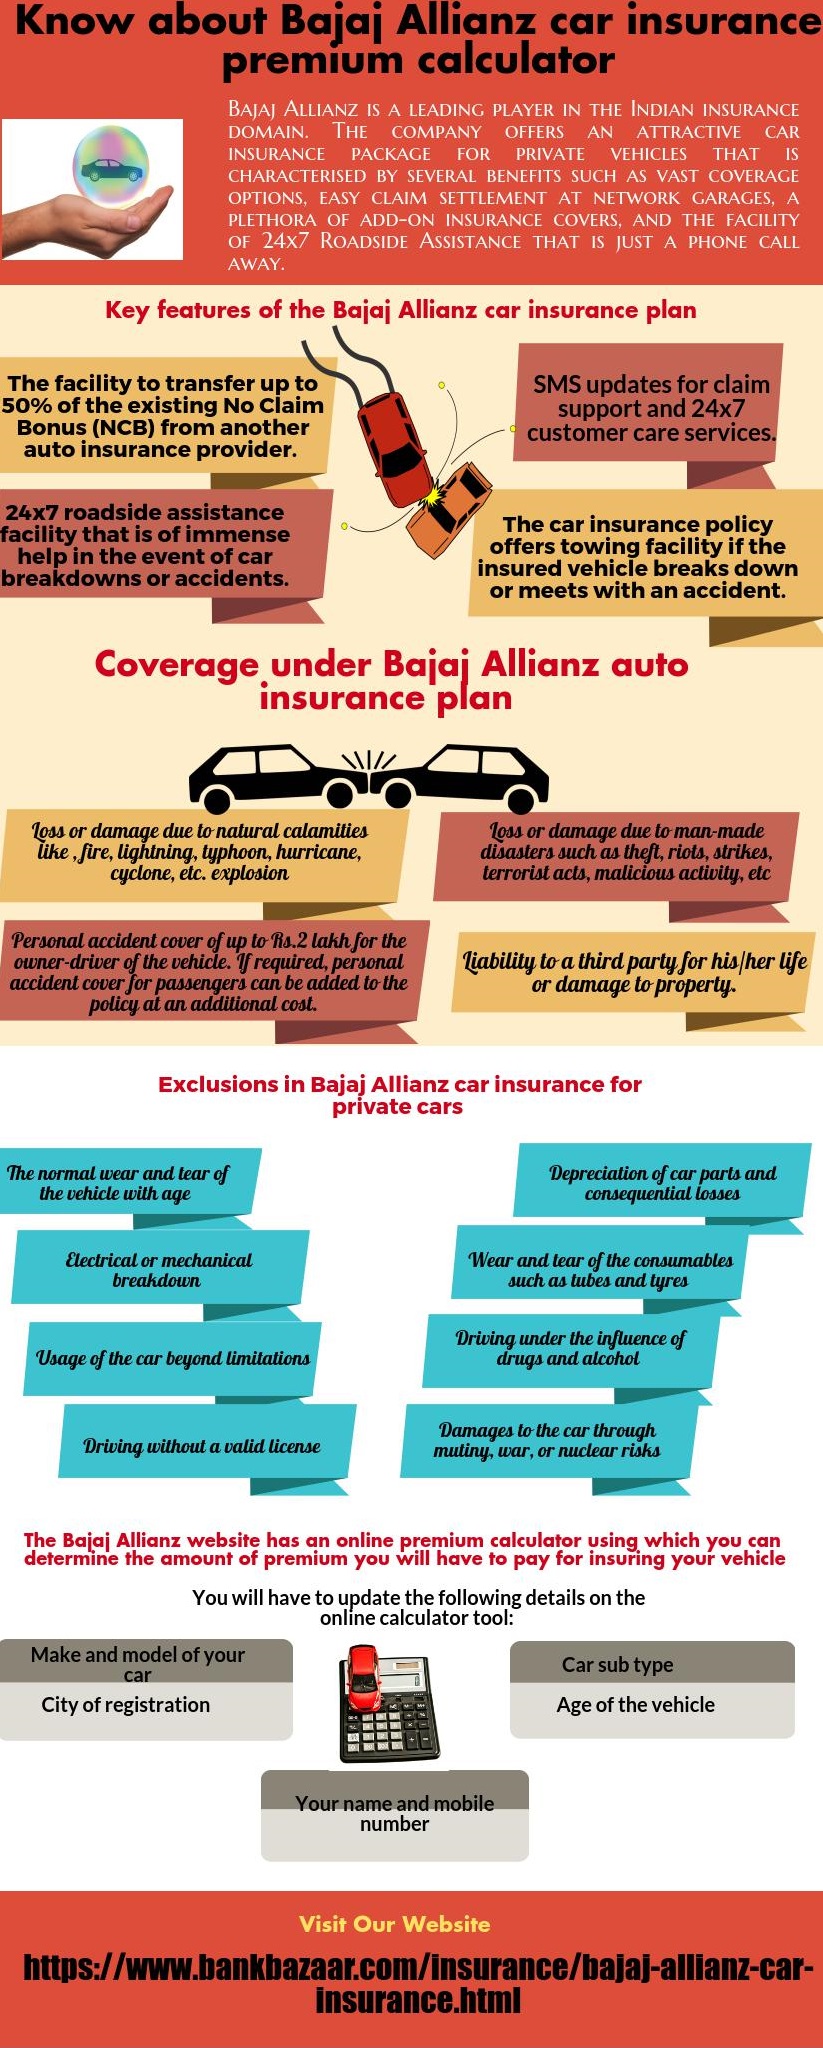 Bajaj Allianz Auto Insurance Premium Calculator On By Insurance123 On Deviantart